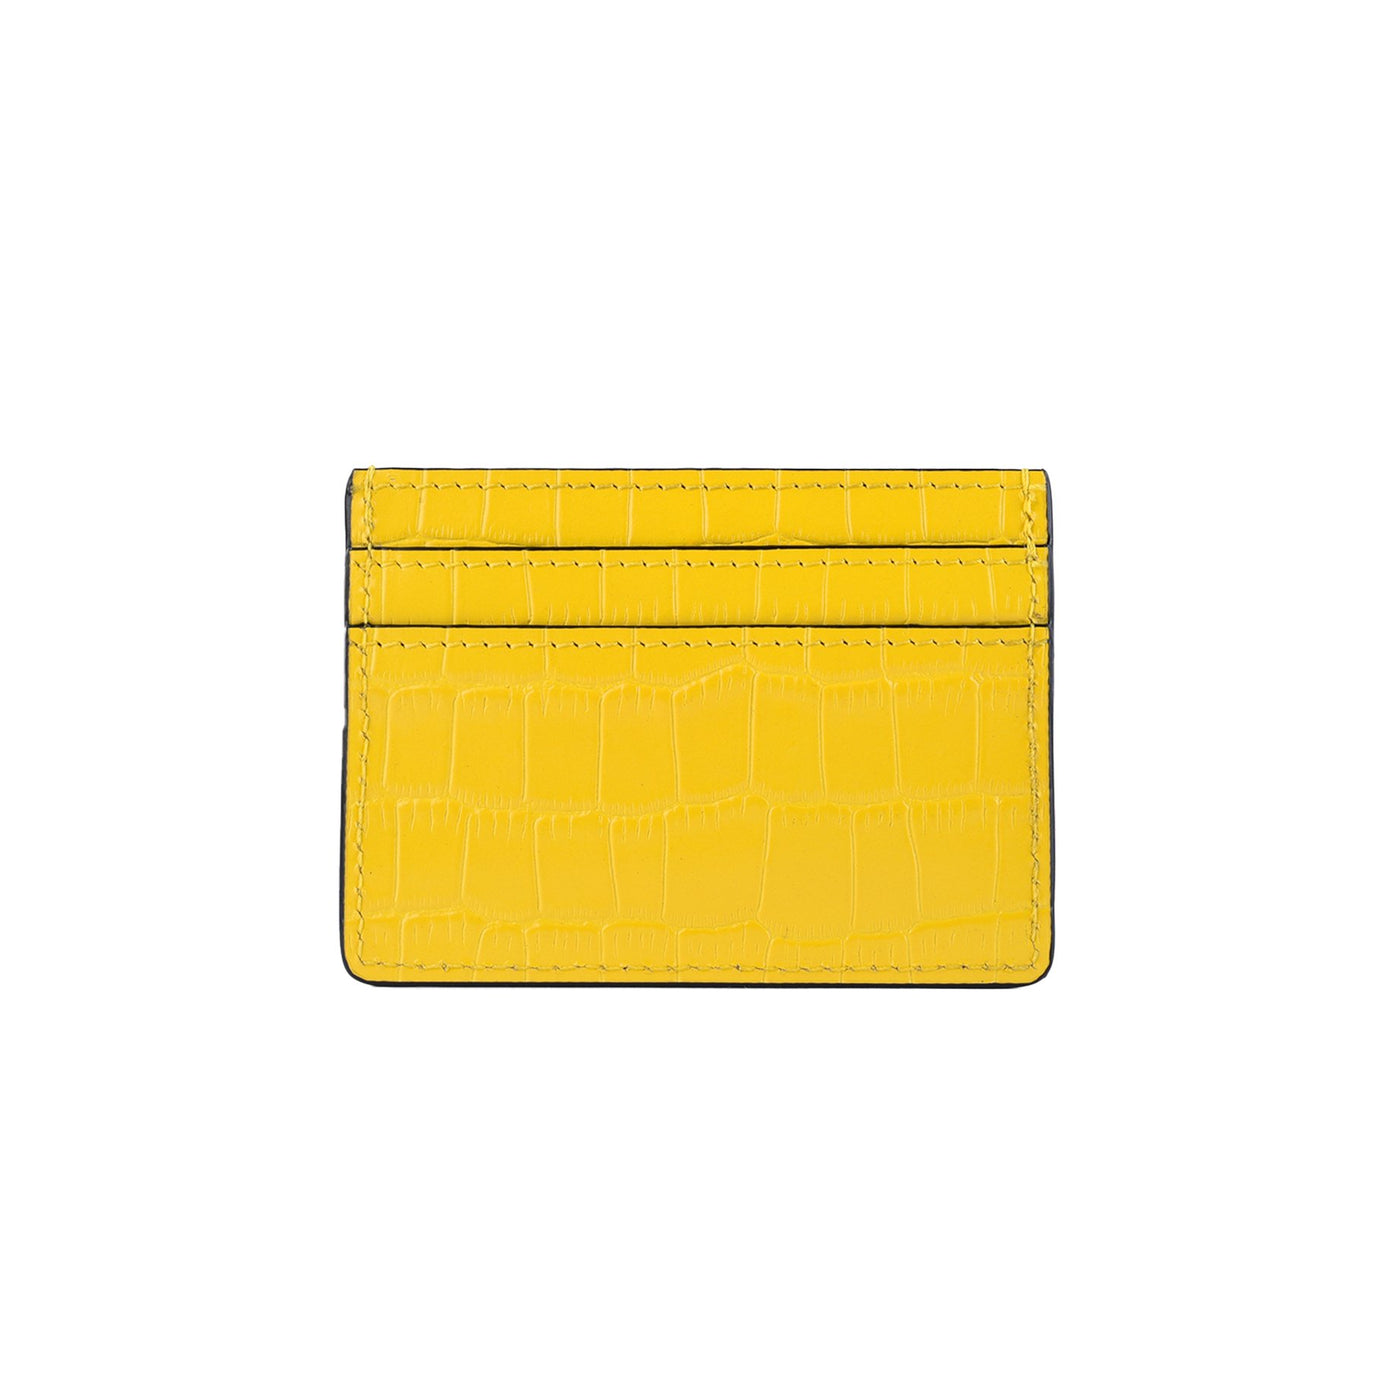 Lemon Yellow Leather Card Holder Wallet